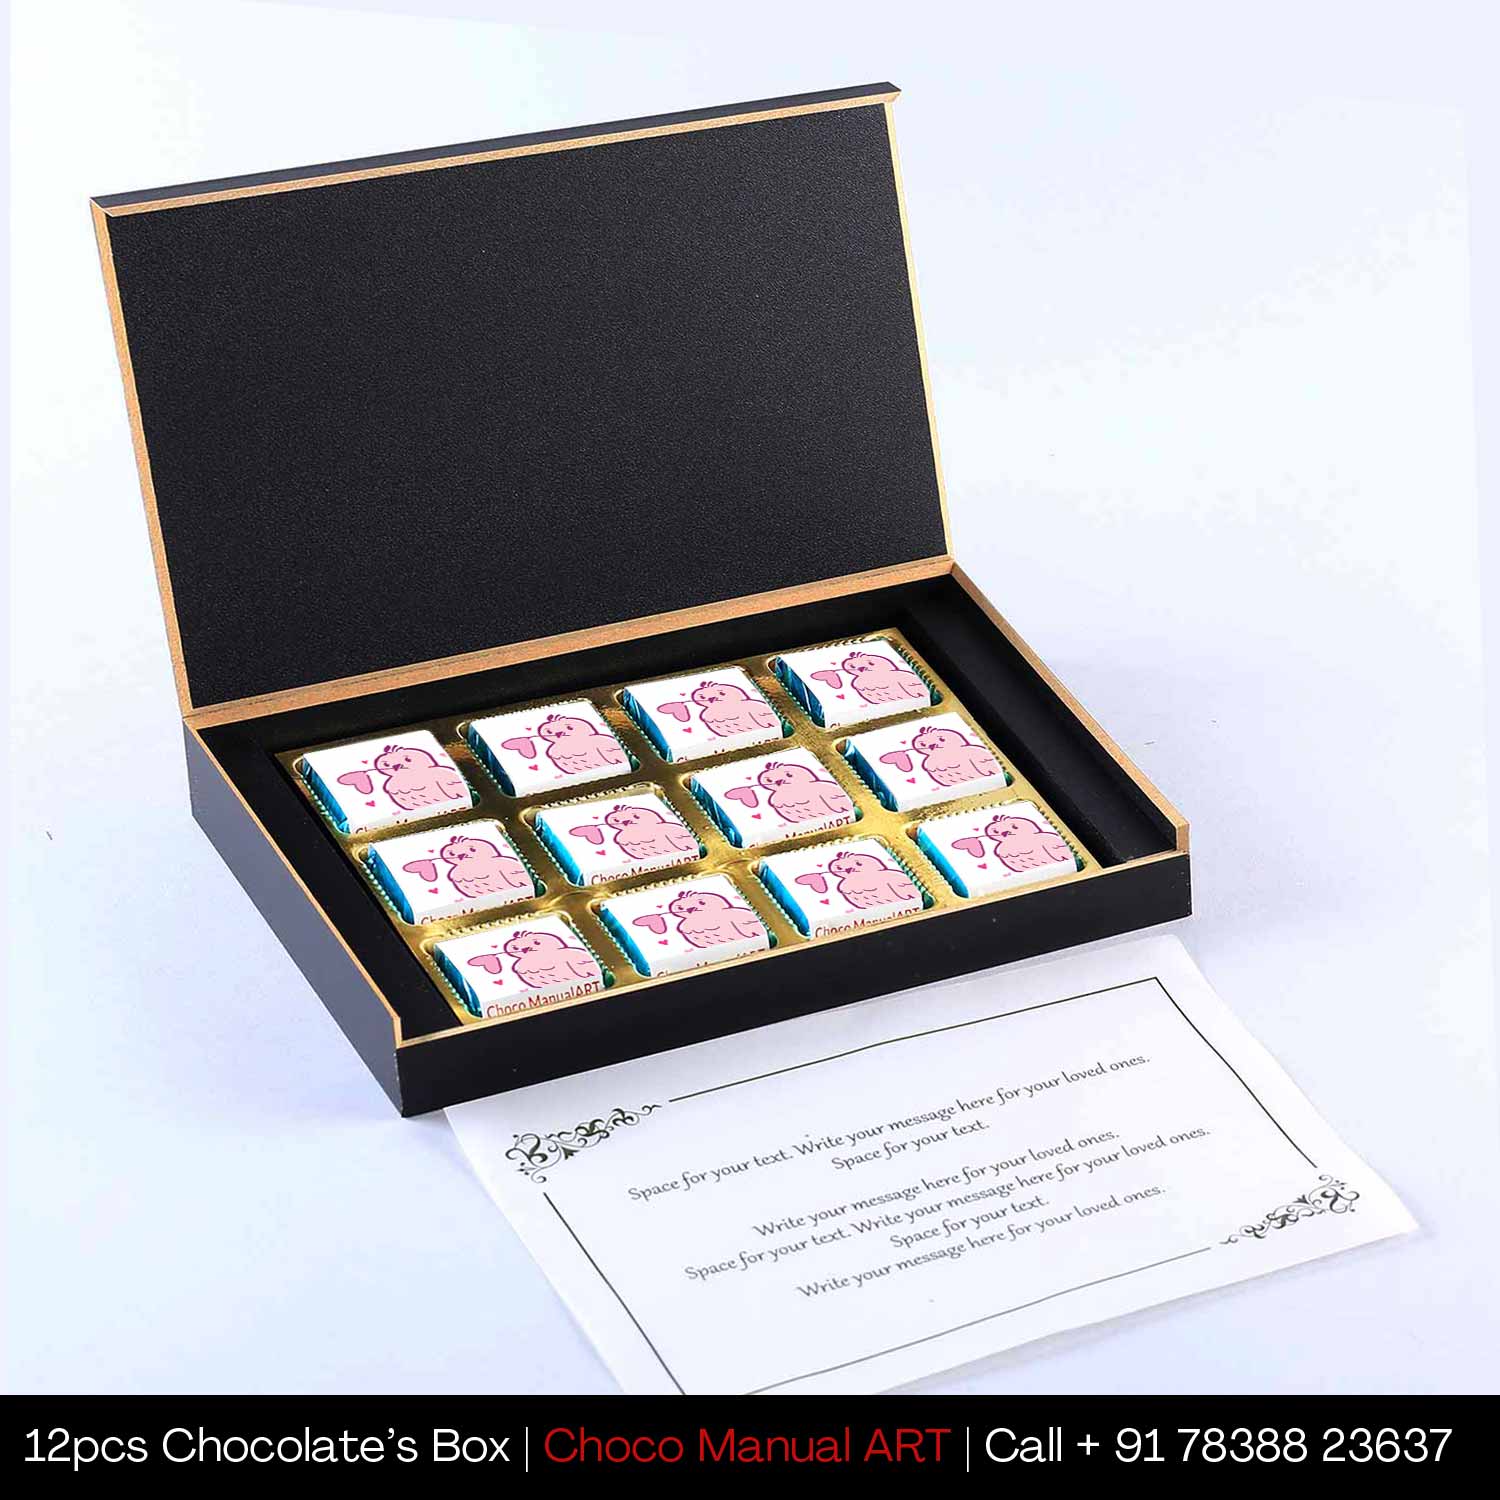 Personalised chocolate gift box I Free shipping I Delicious chocolates